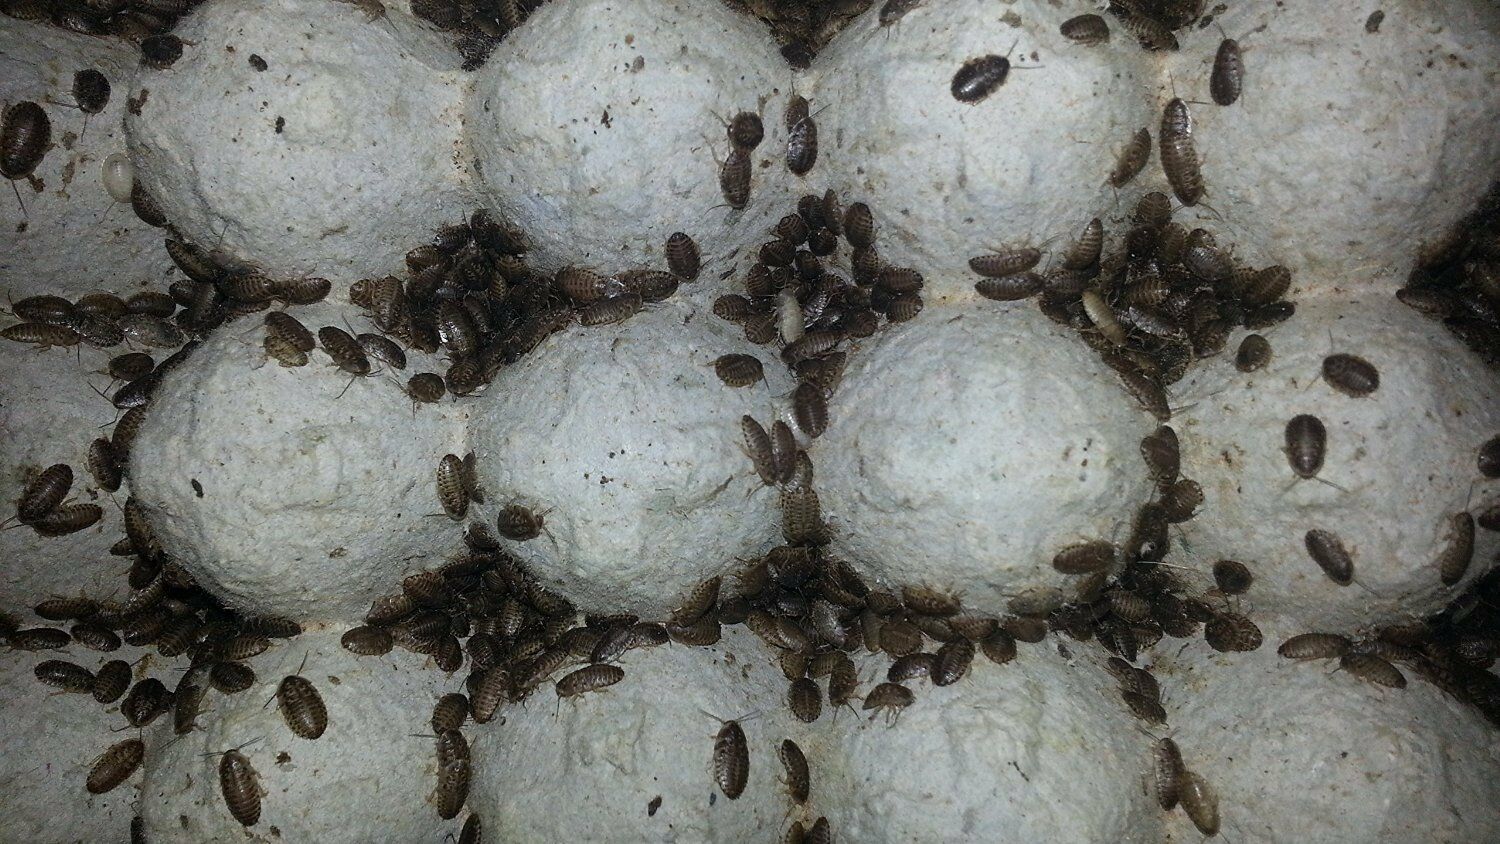 Live Small Dubia Roaches Up To 1/2 Inches Blaptica Feeder Dubai Roaches